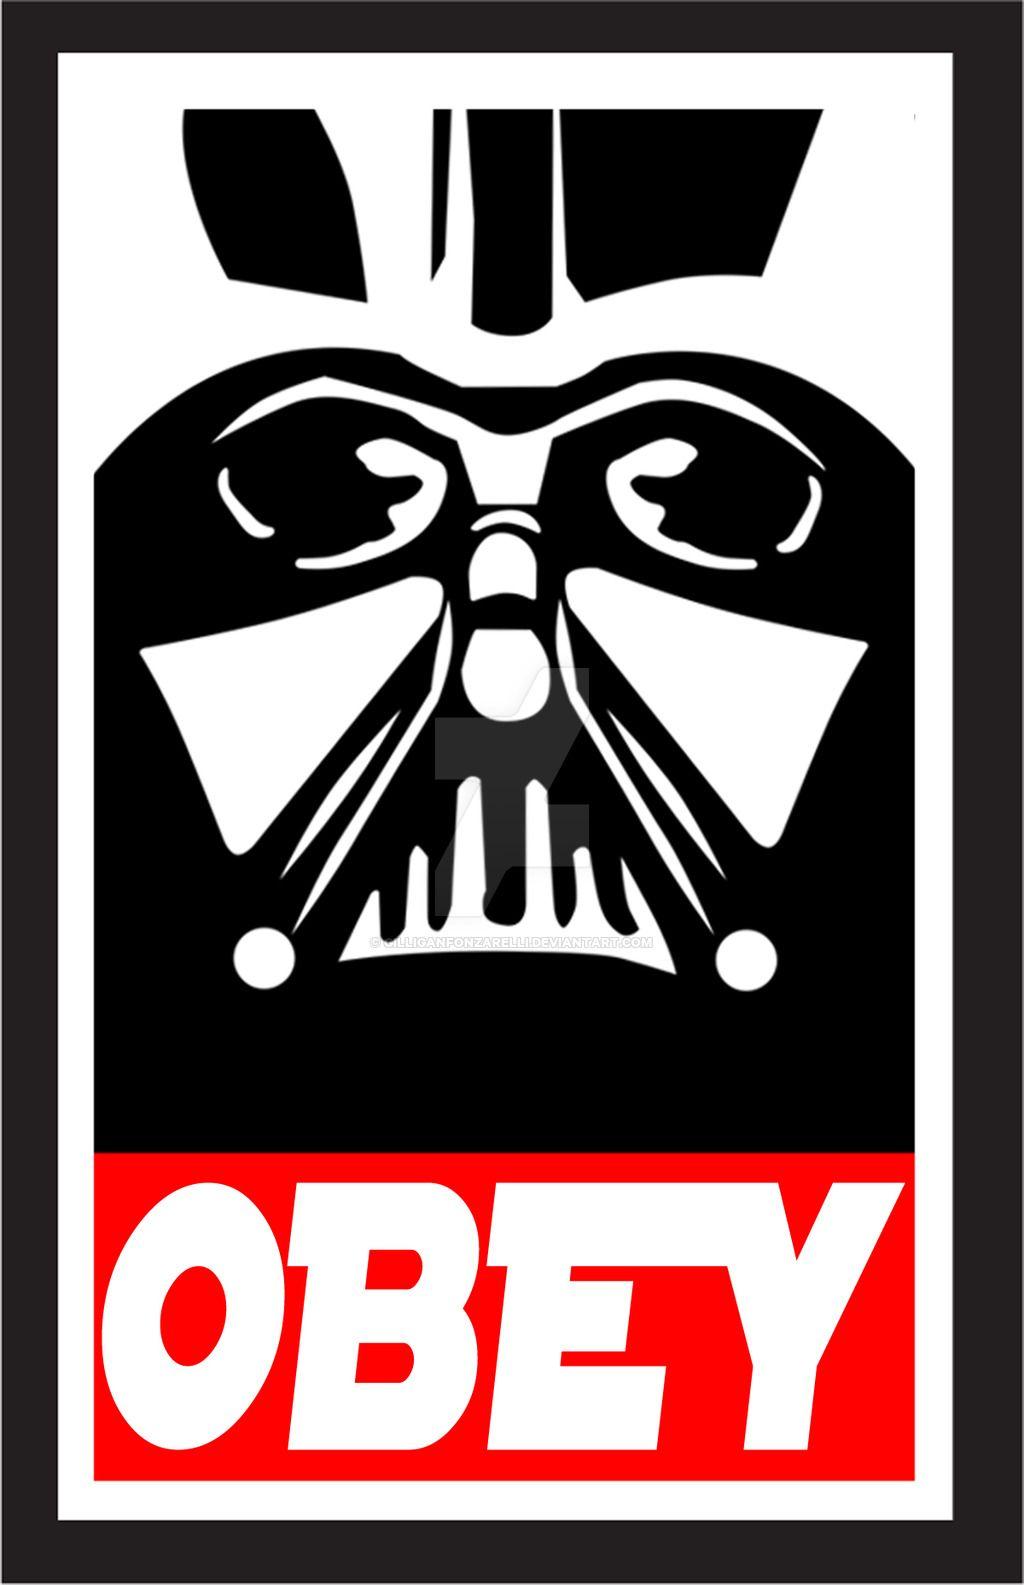 The Obey Logo - Obey Logos